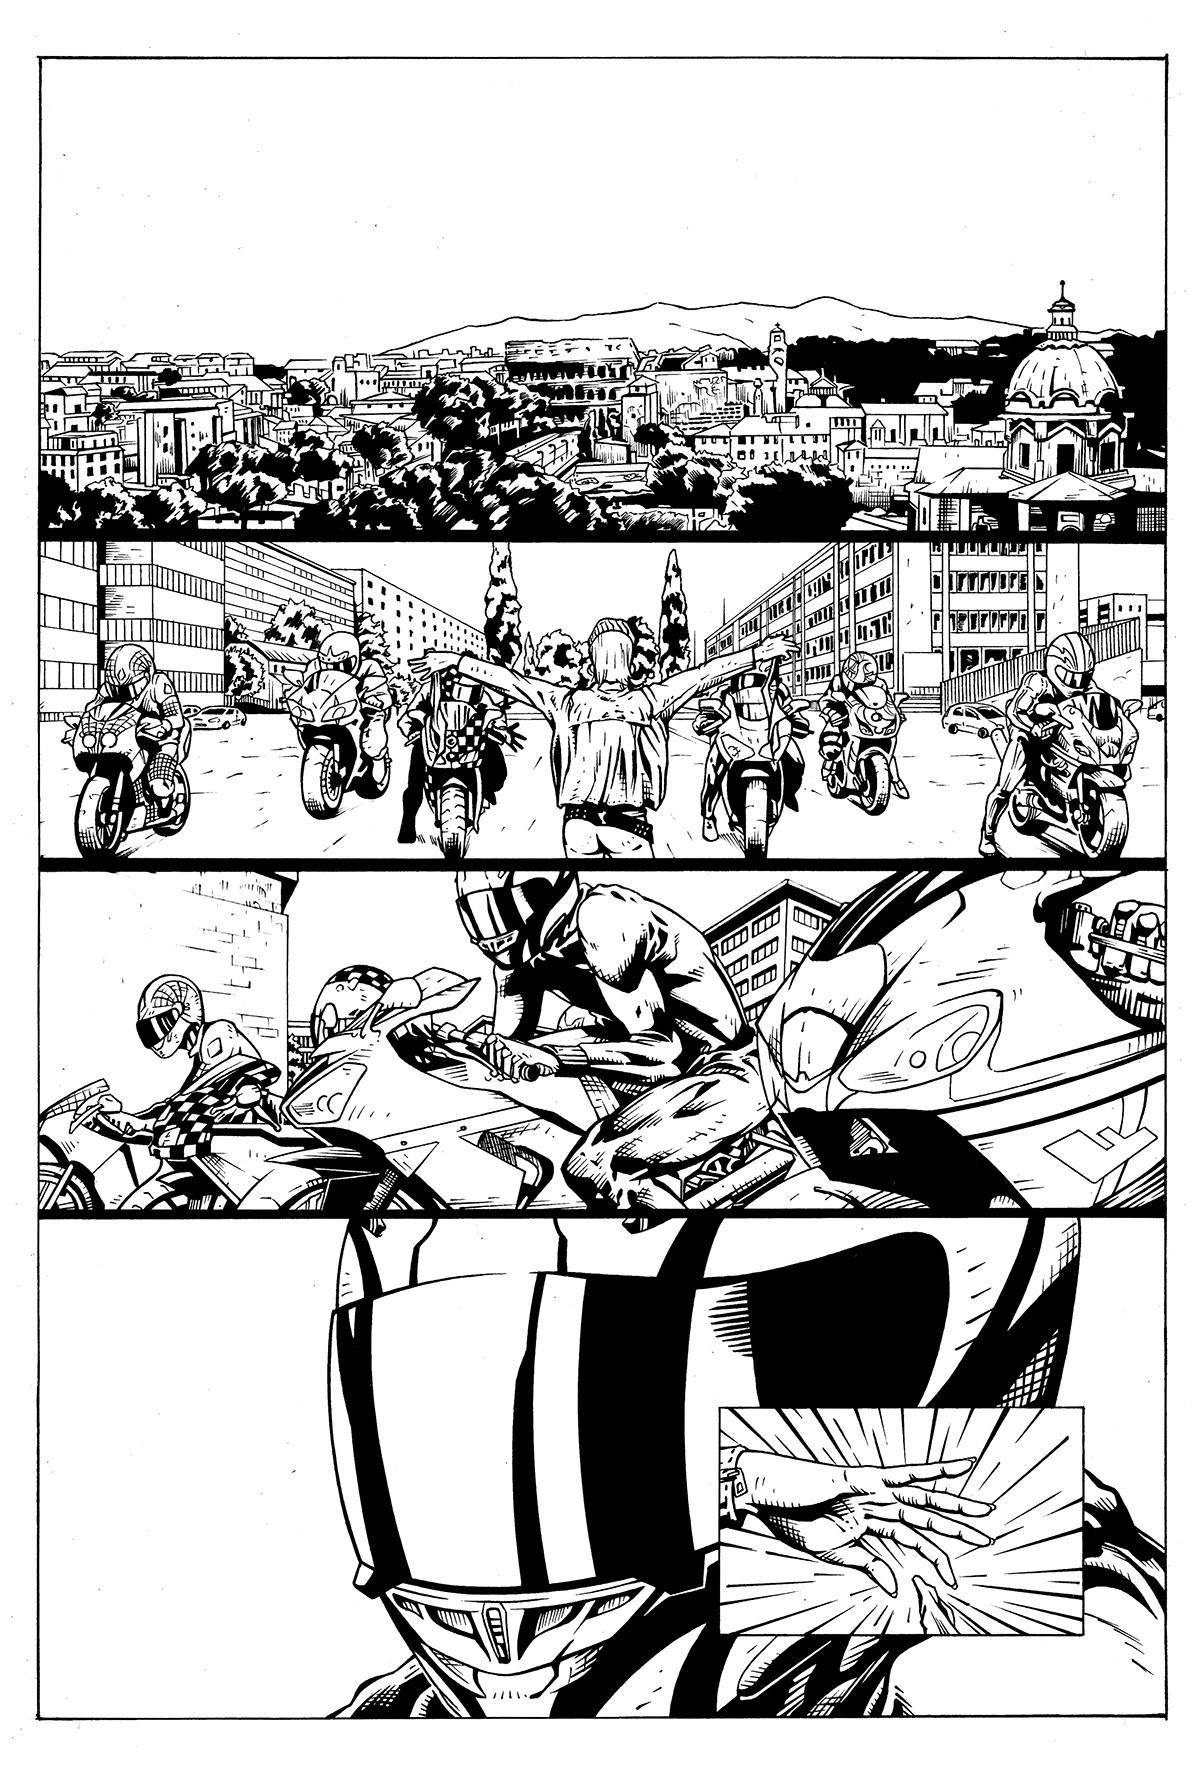 comics comic art Comic Book page sequential print traditional narrative